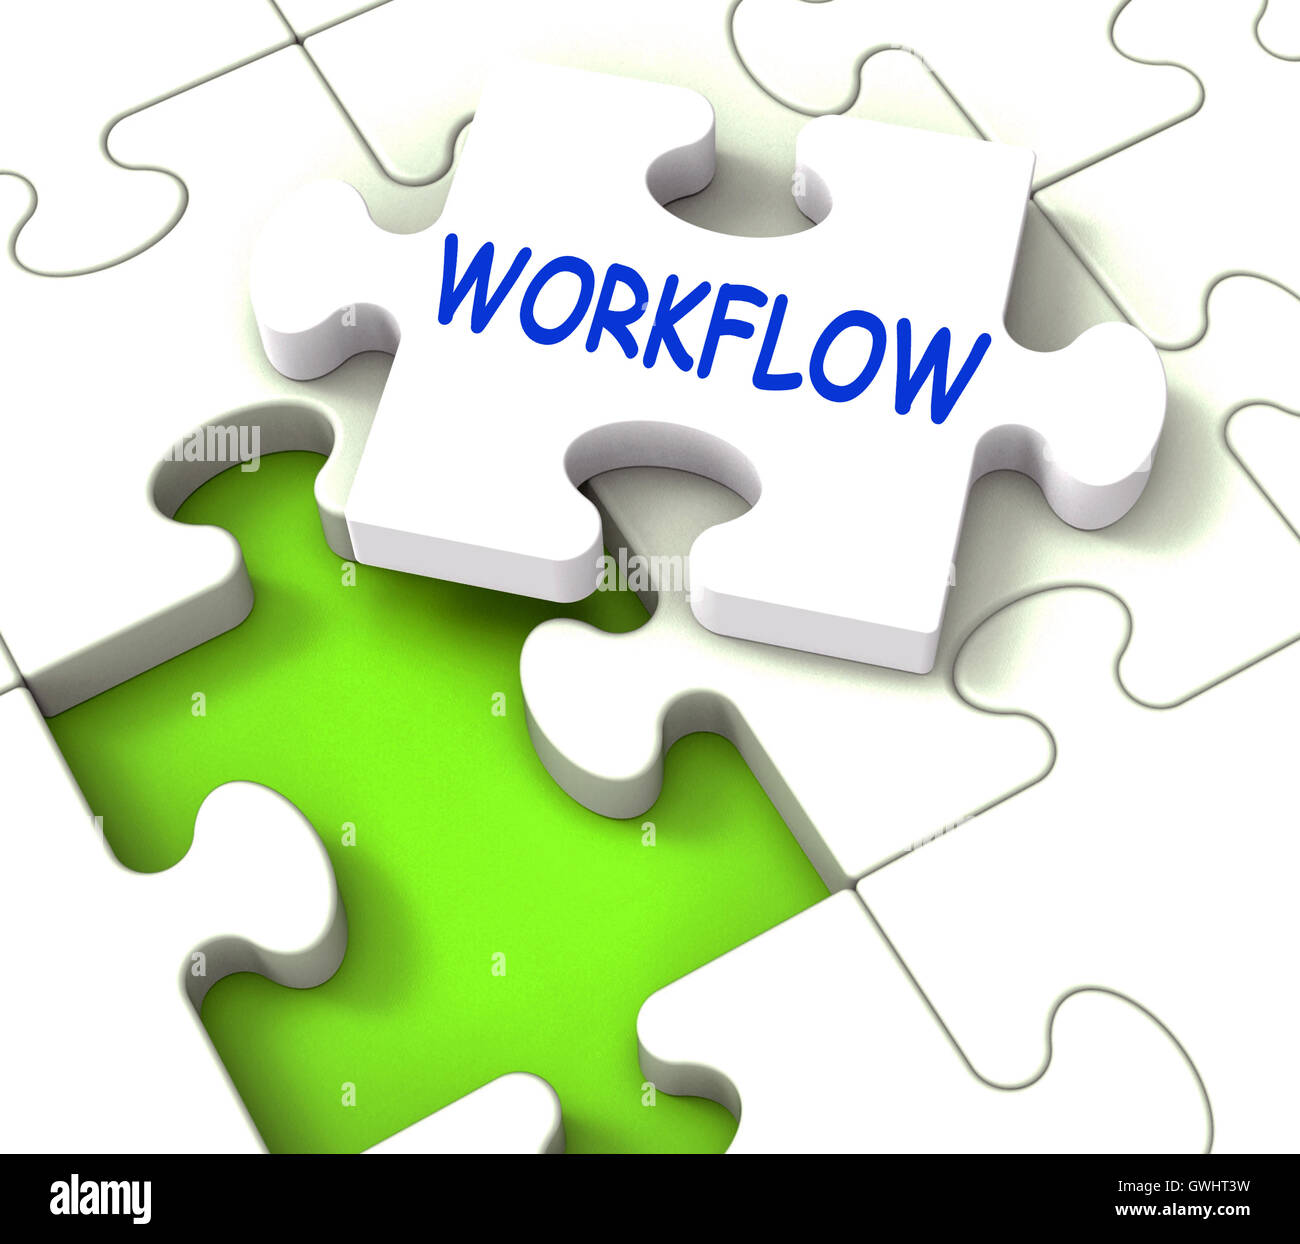 Workflow Puzzle Shows Structure Process Flow Or Procedure Stock Photo